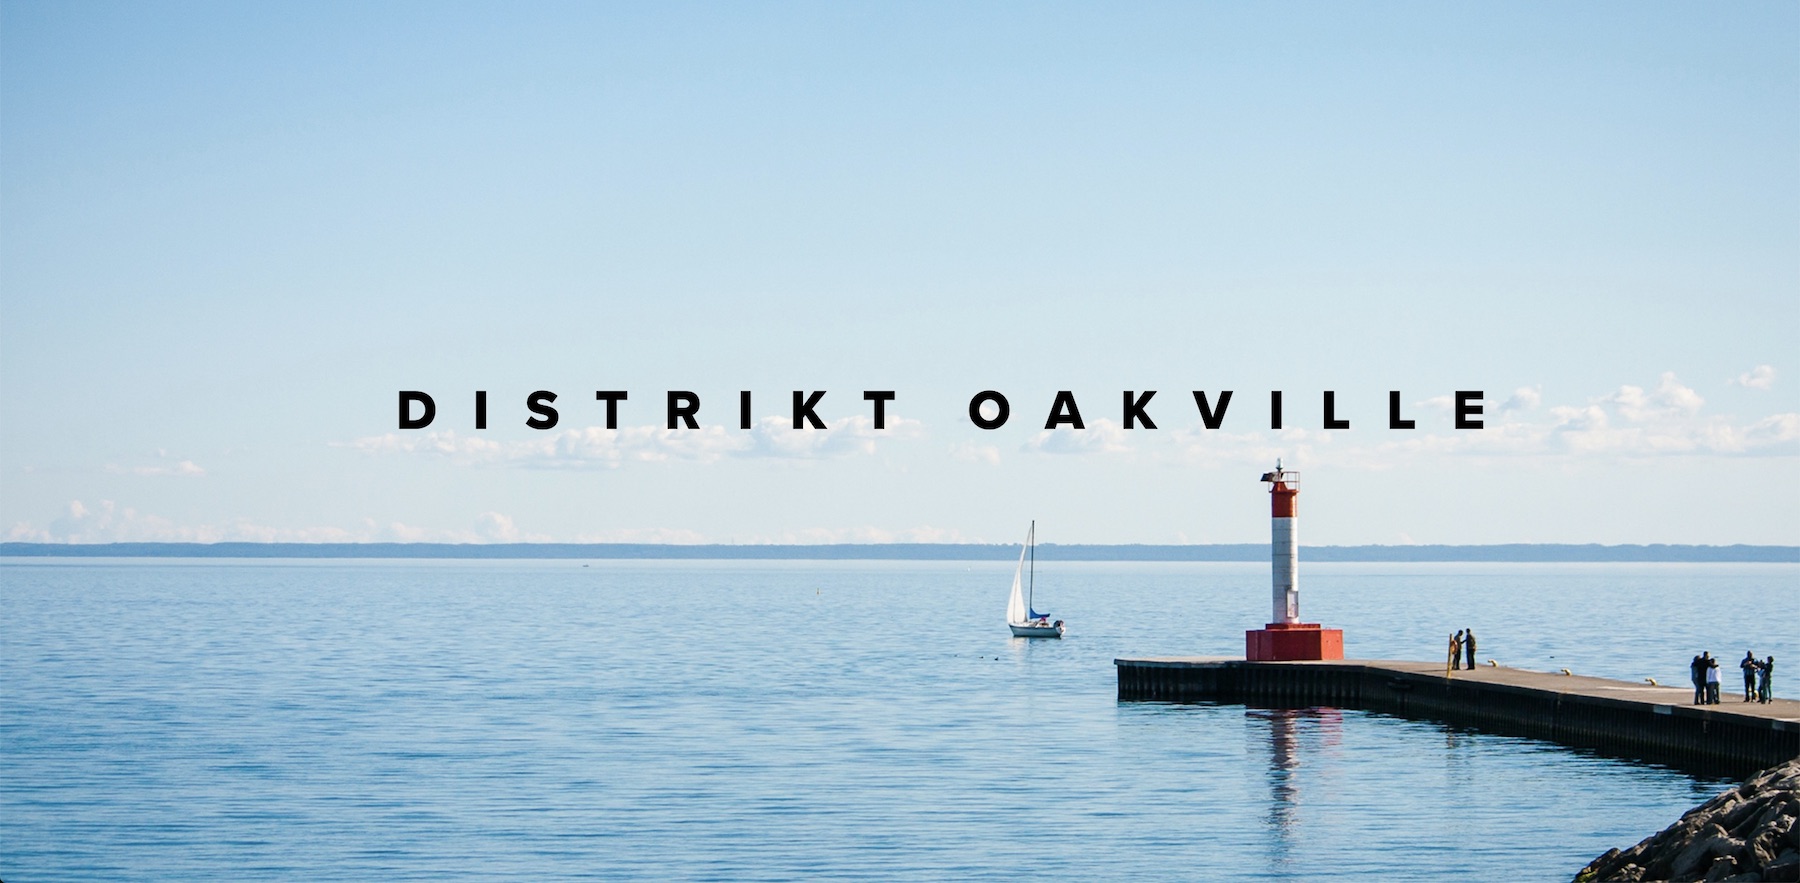 Distrikt Oakville text with Lake Ontario background